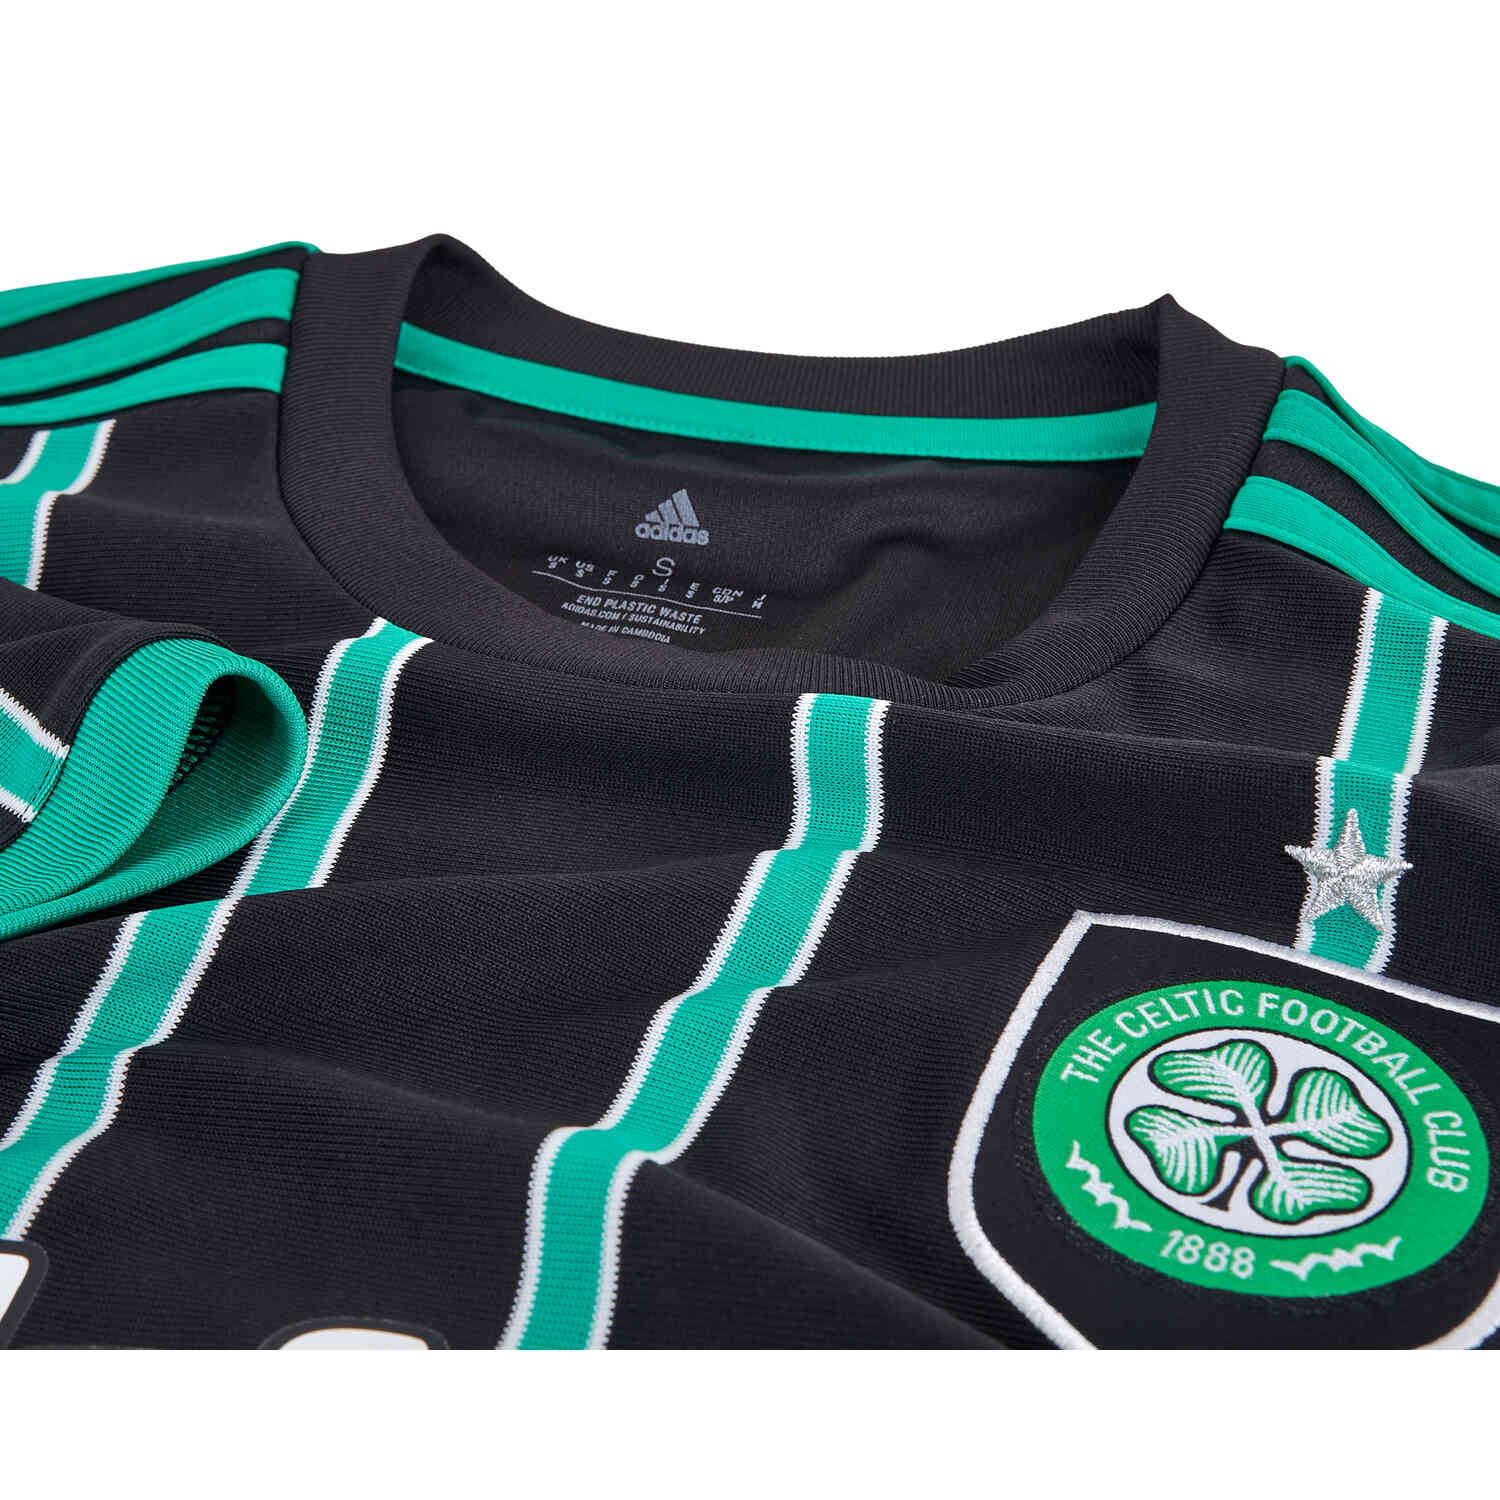 Black adidas Celtic FC 2022/23 Away Shirt Women's